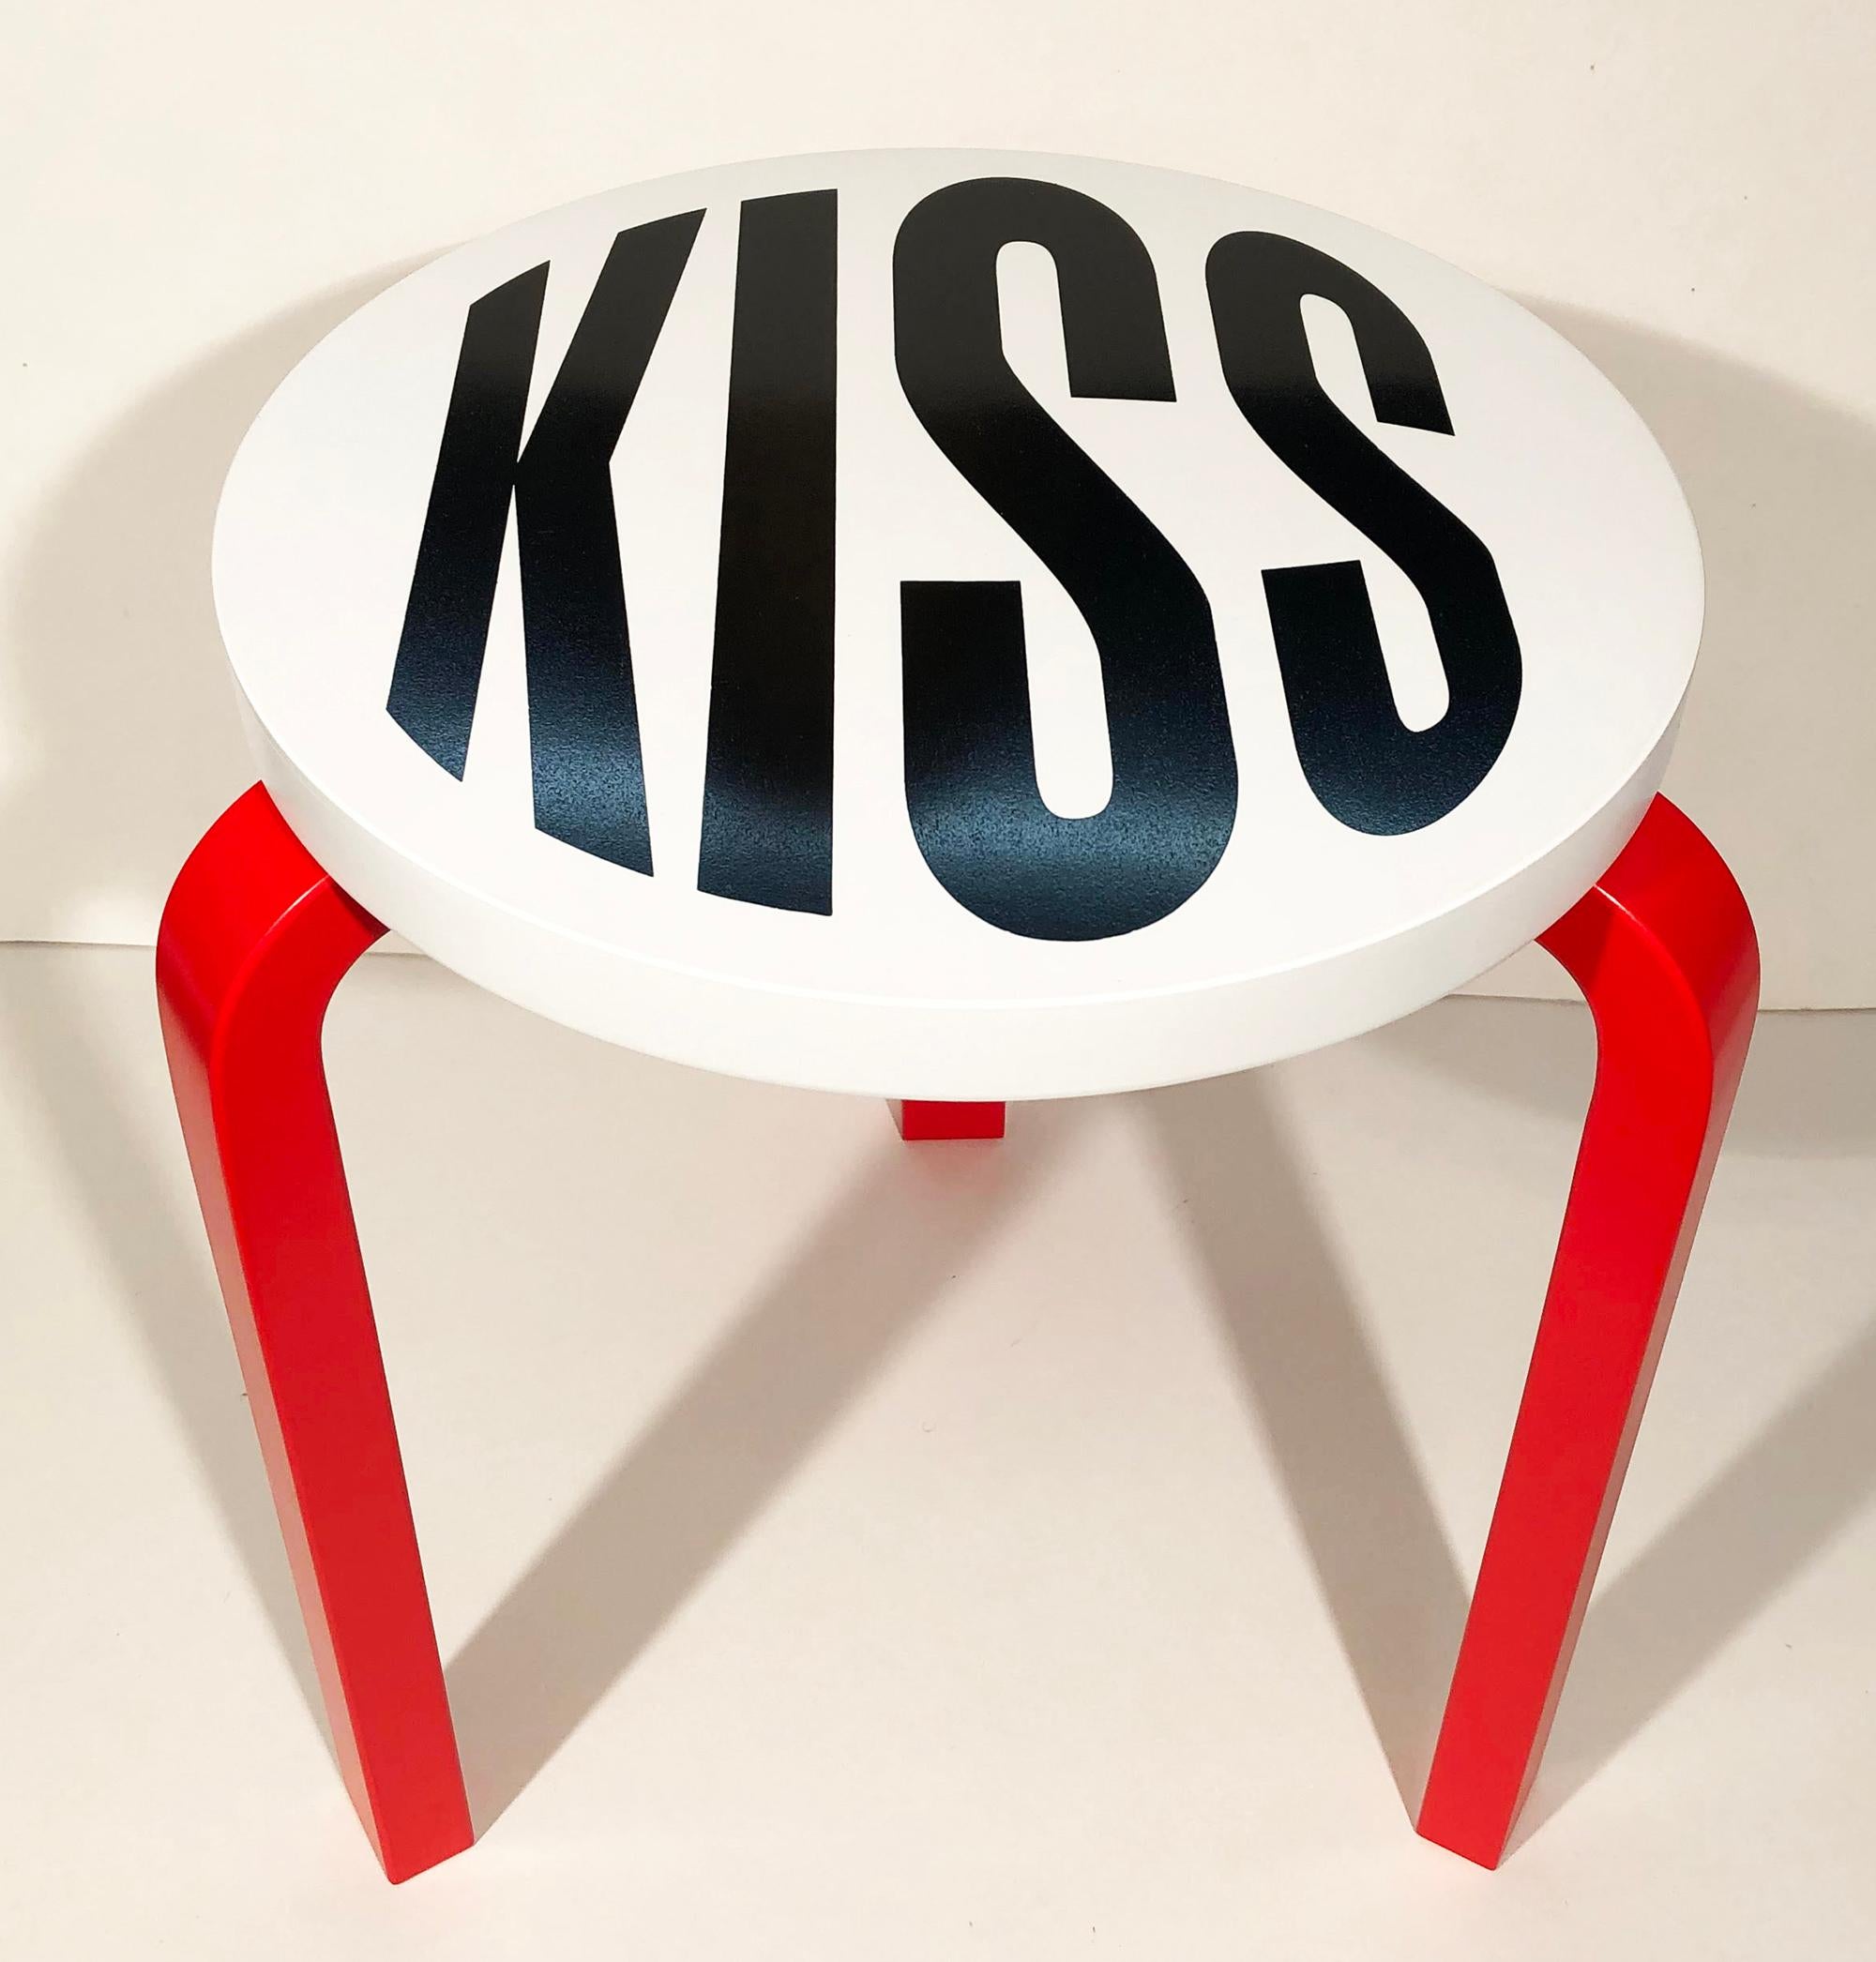 BARBARA KRUGER Untitled (Kiss) (2019), 2019 Hand-Signed - Contemporary Print by Barbara Kruger